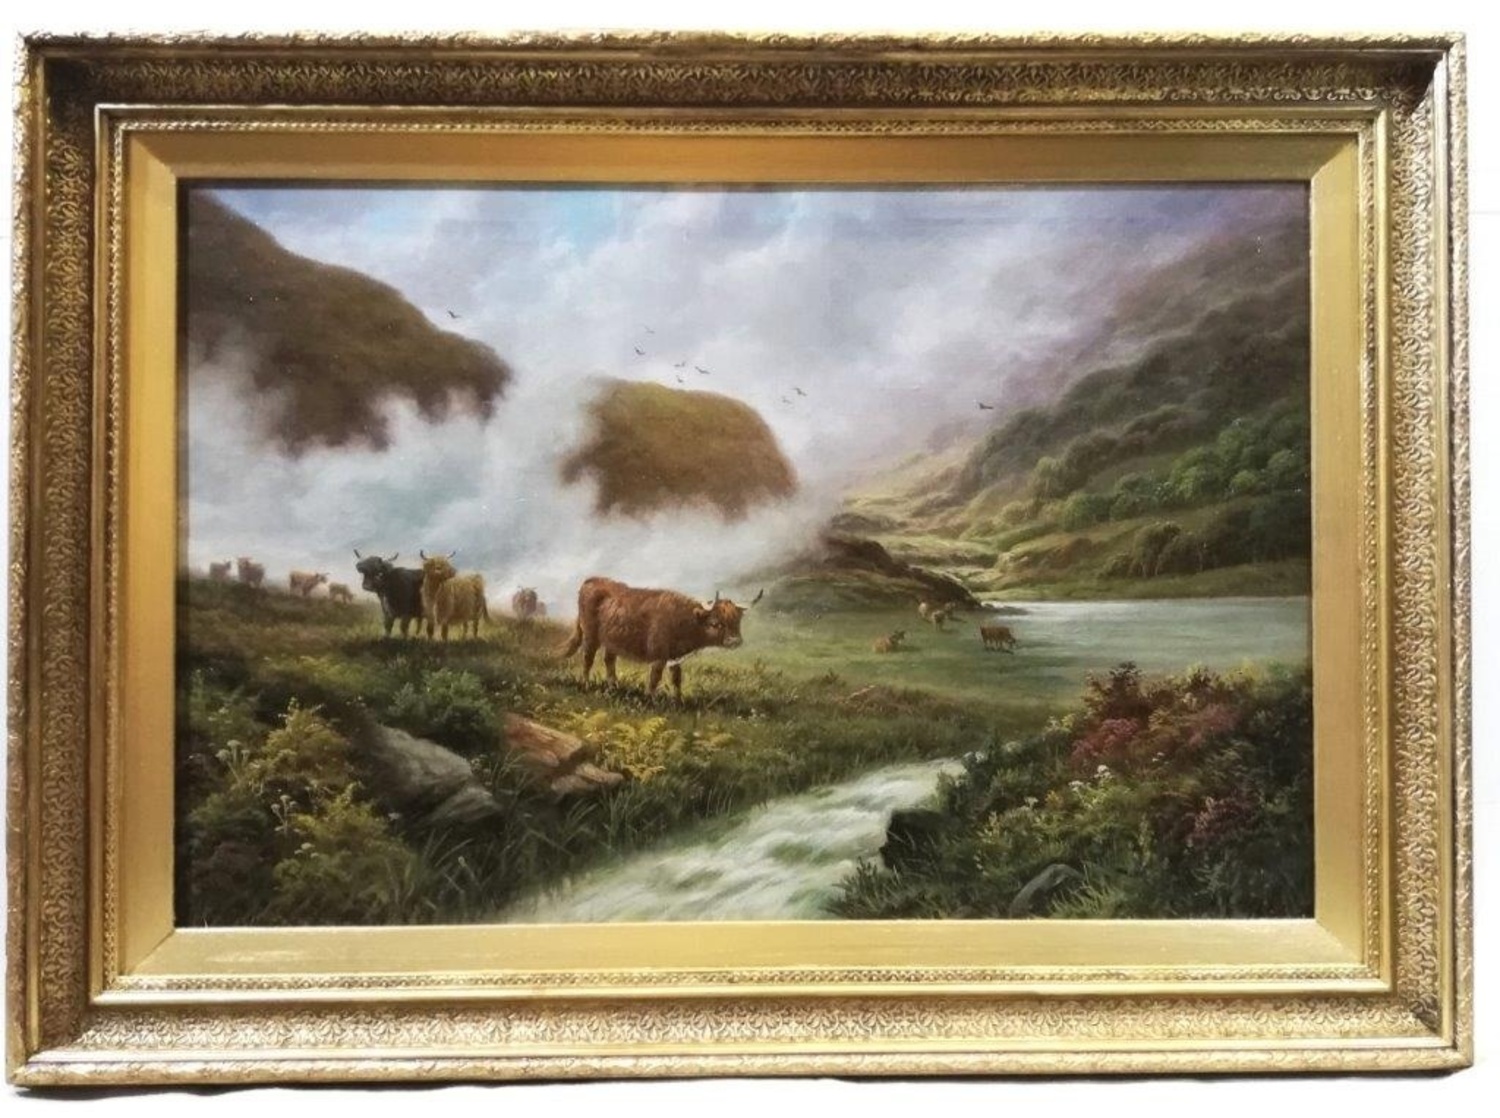 Cattle in a Mountainous River Landscape